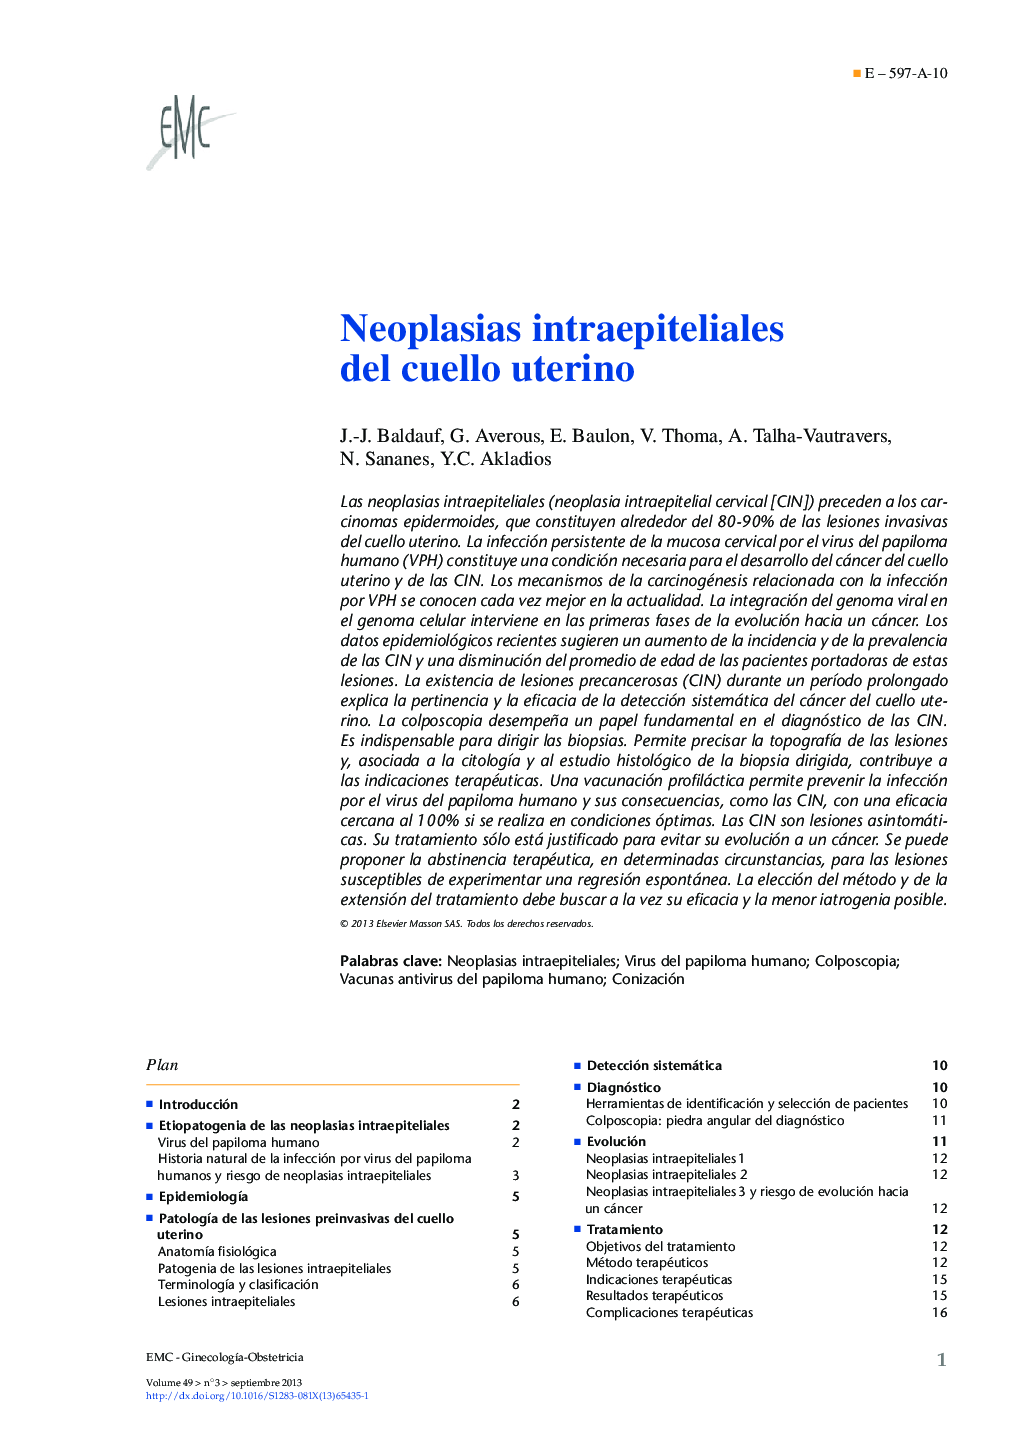 Neoplasias intraepiteliales del cuello uterino